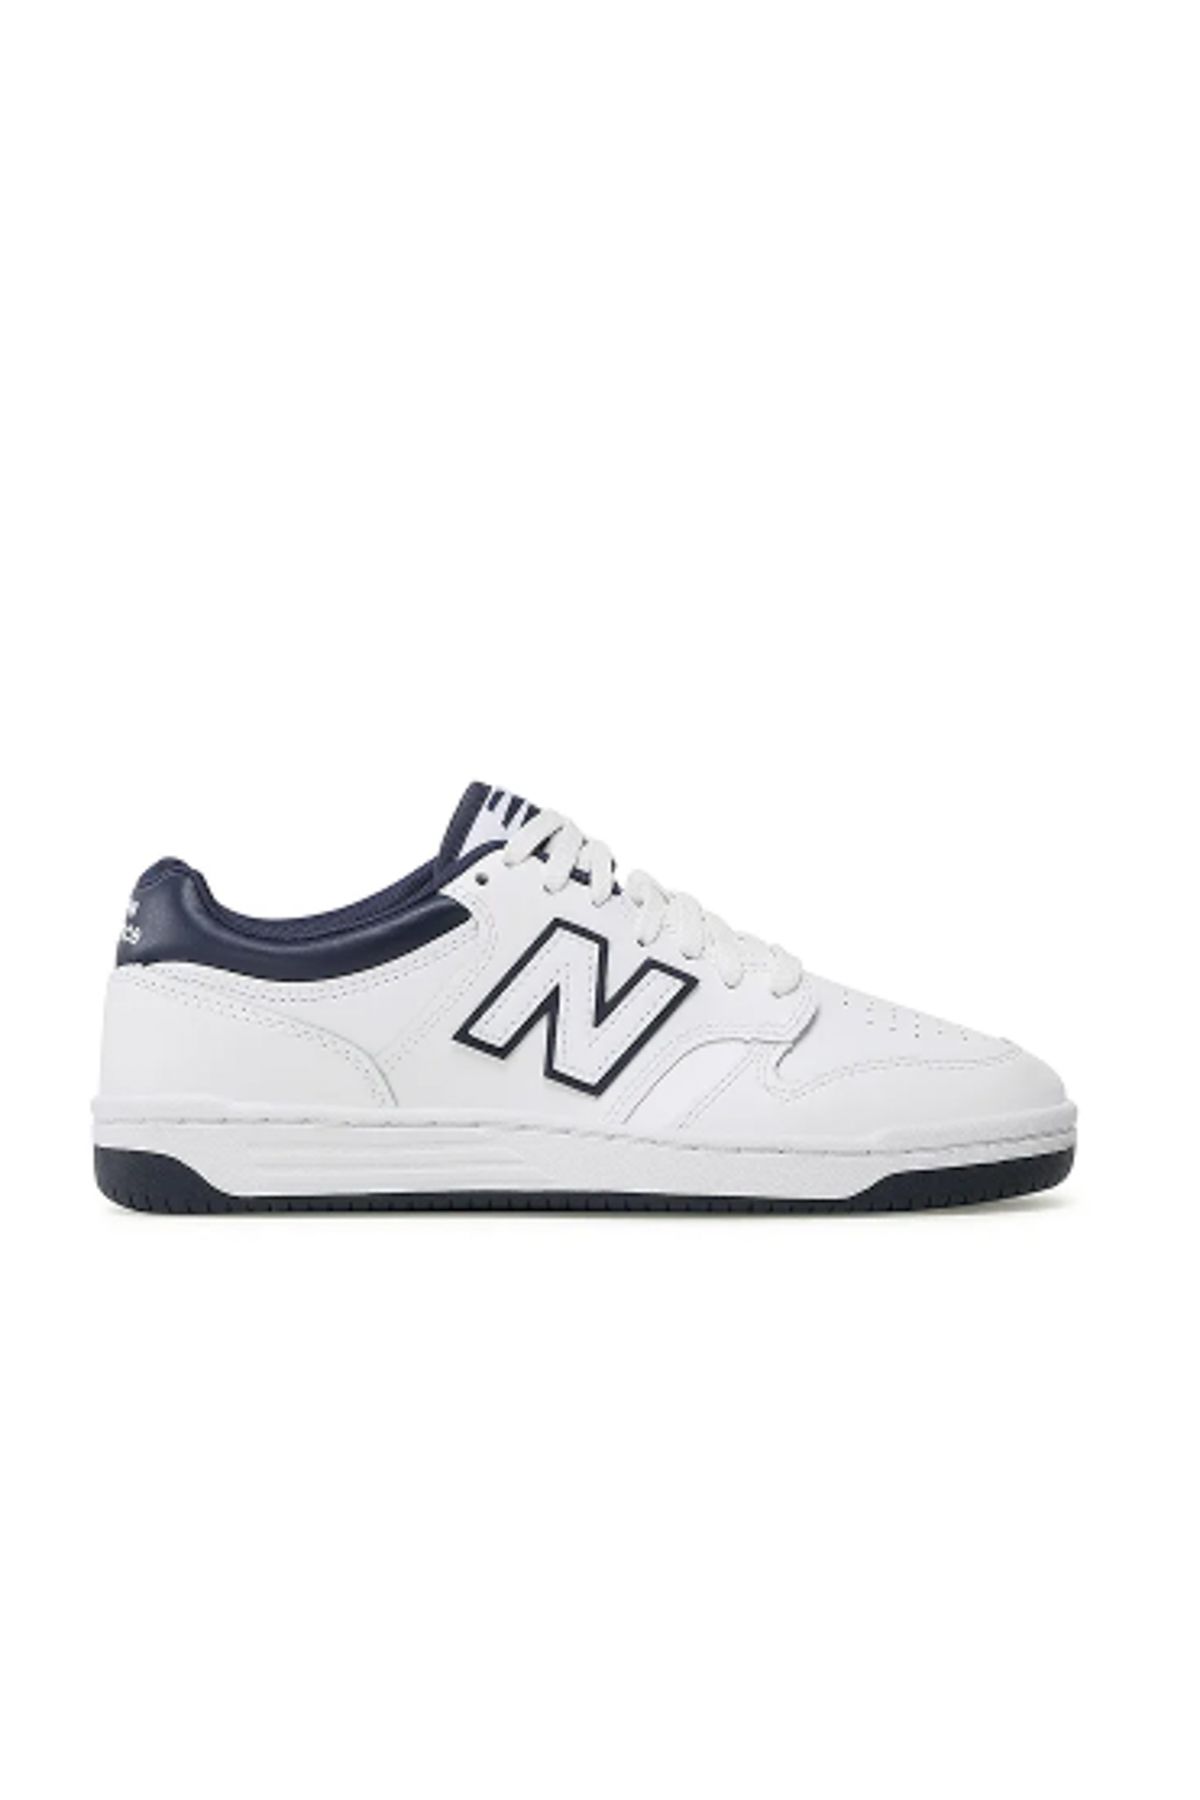 New Balance Nb Lifestyle Unisex Shoes Unisex Beyaz Spor Ayakkabı Bb480lwn